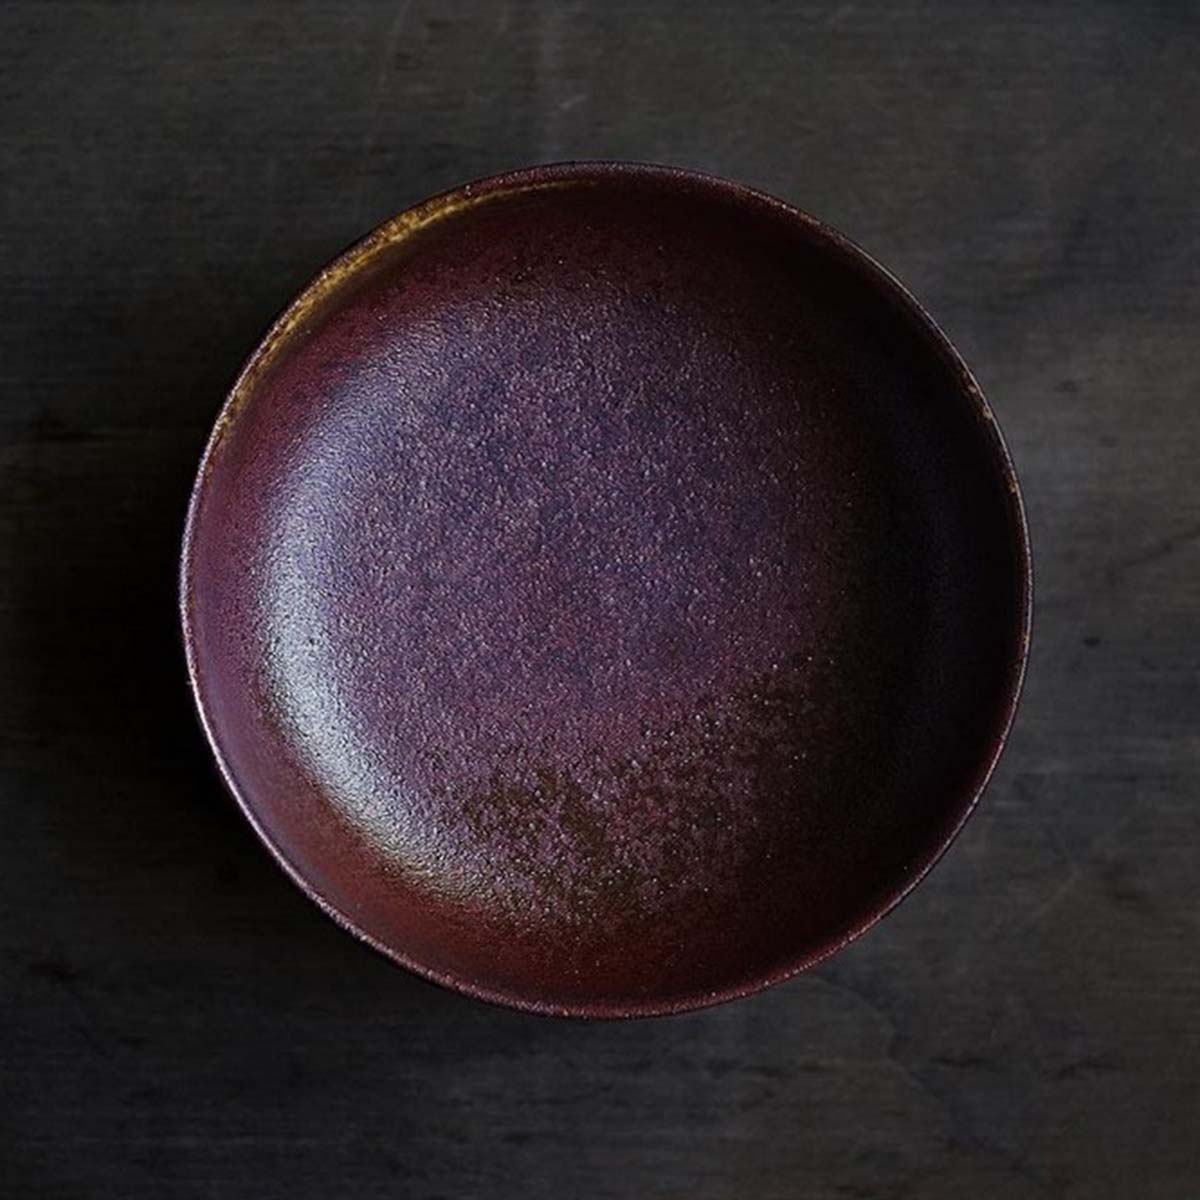 Kuriēto Japanese Cat Bowl, In Burgundy Round Shape | at Made Moggie